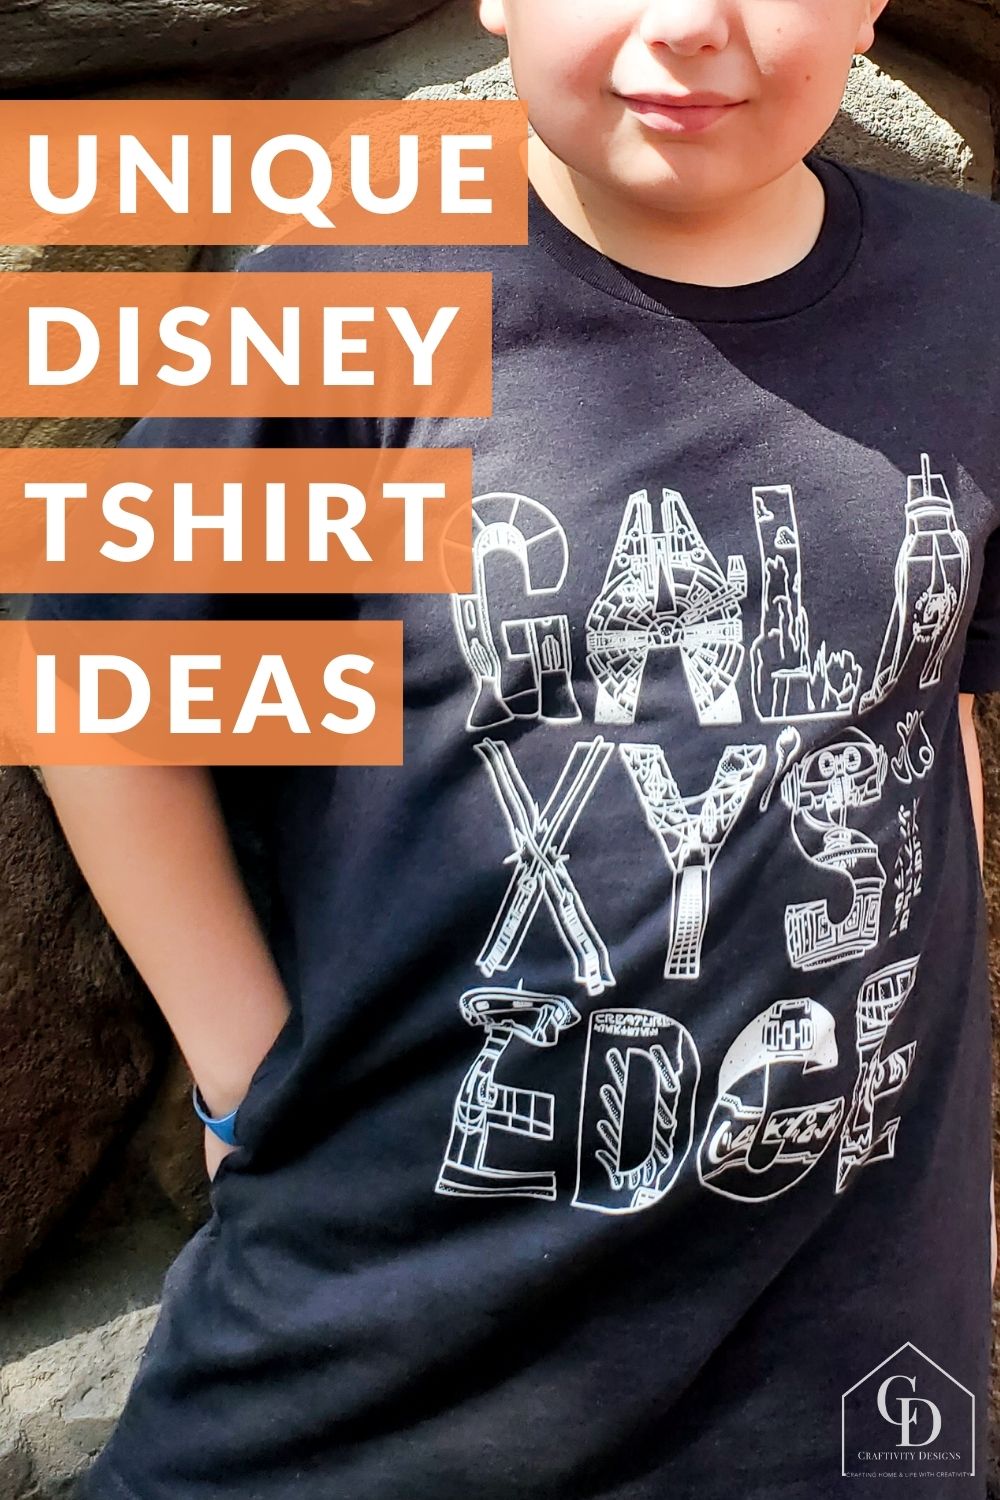 Crafting T-Shirts, Unique Designs